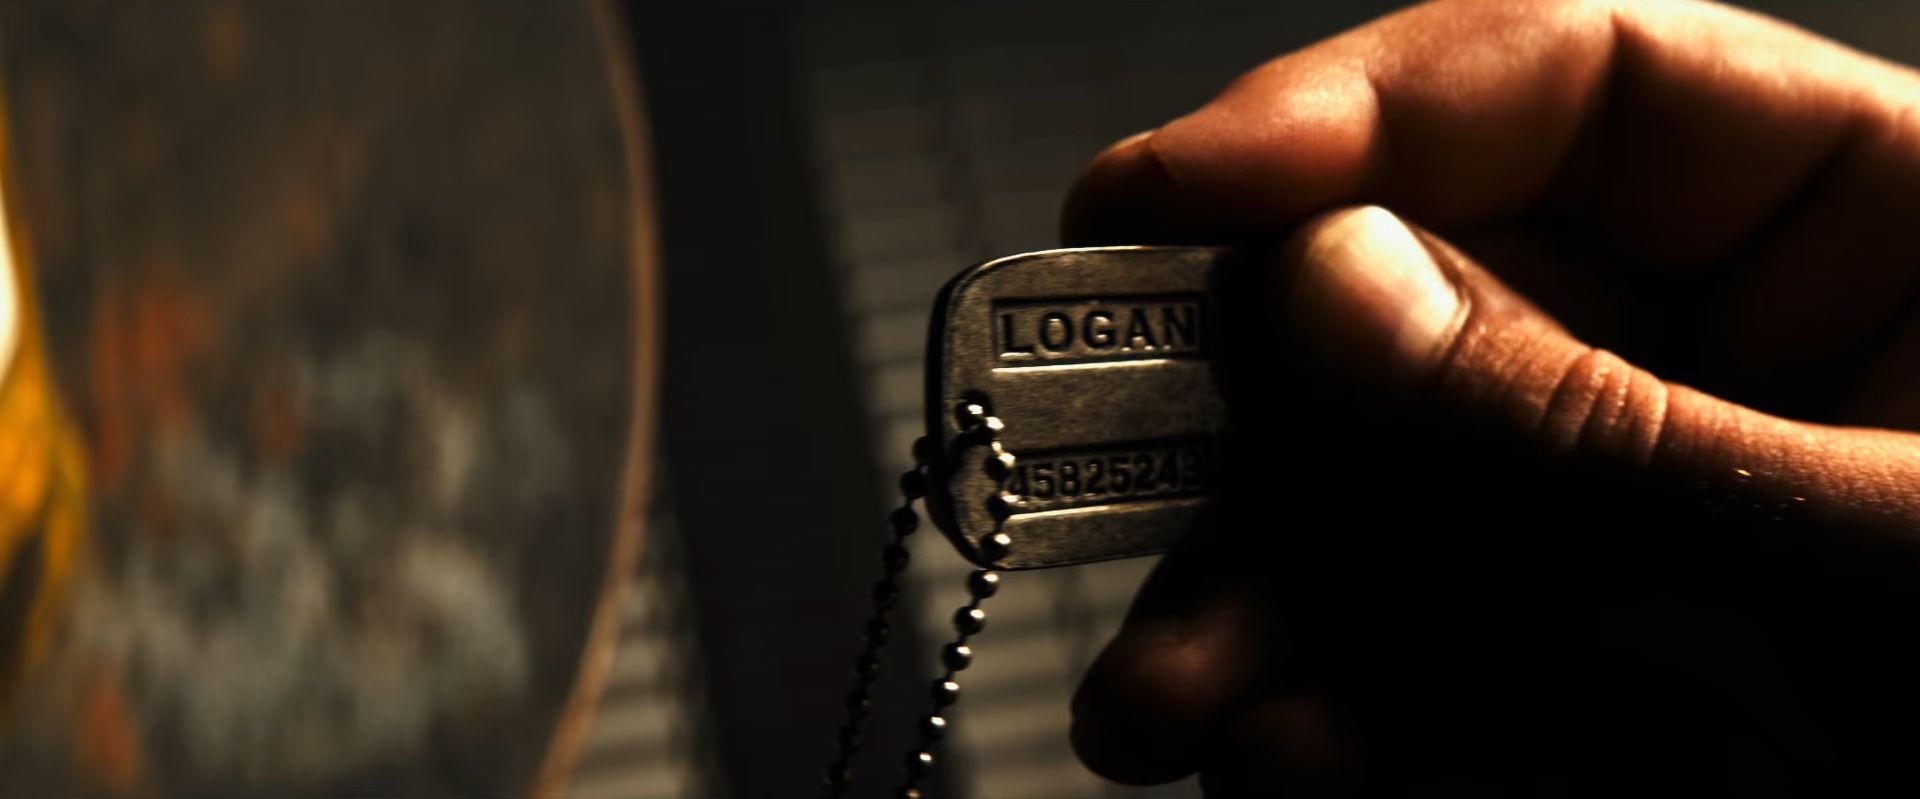 Logan Trailer - Dog tags front